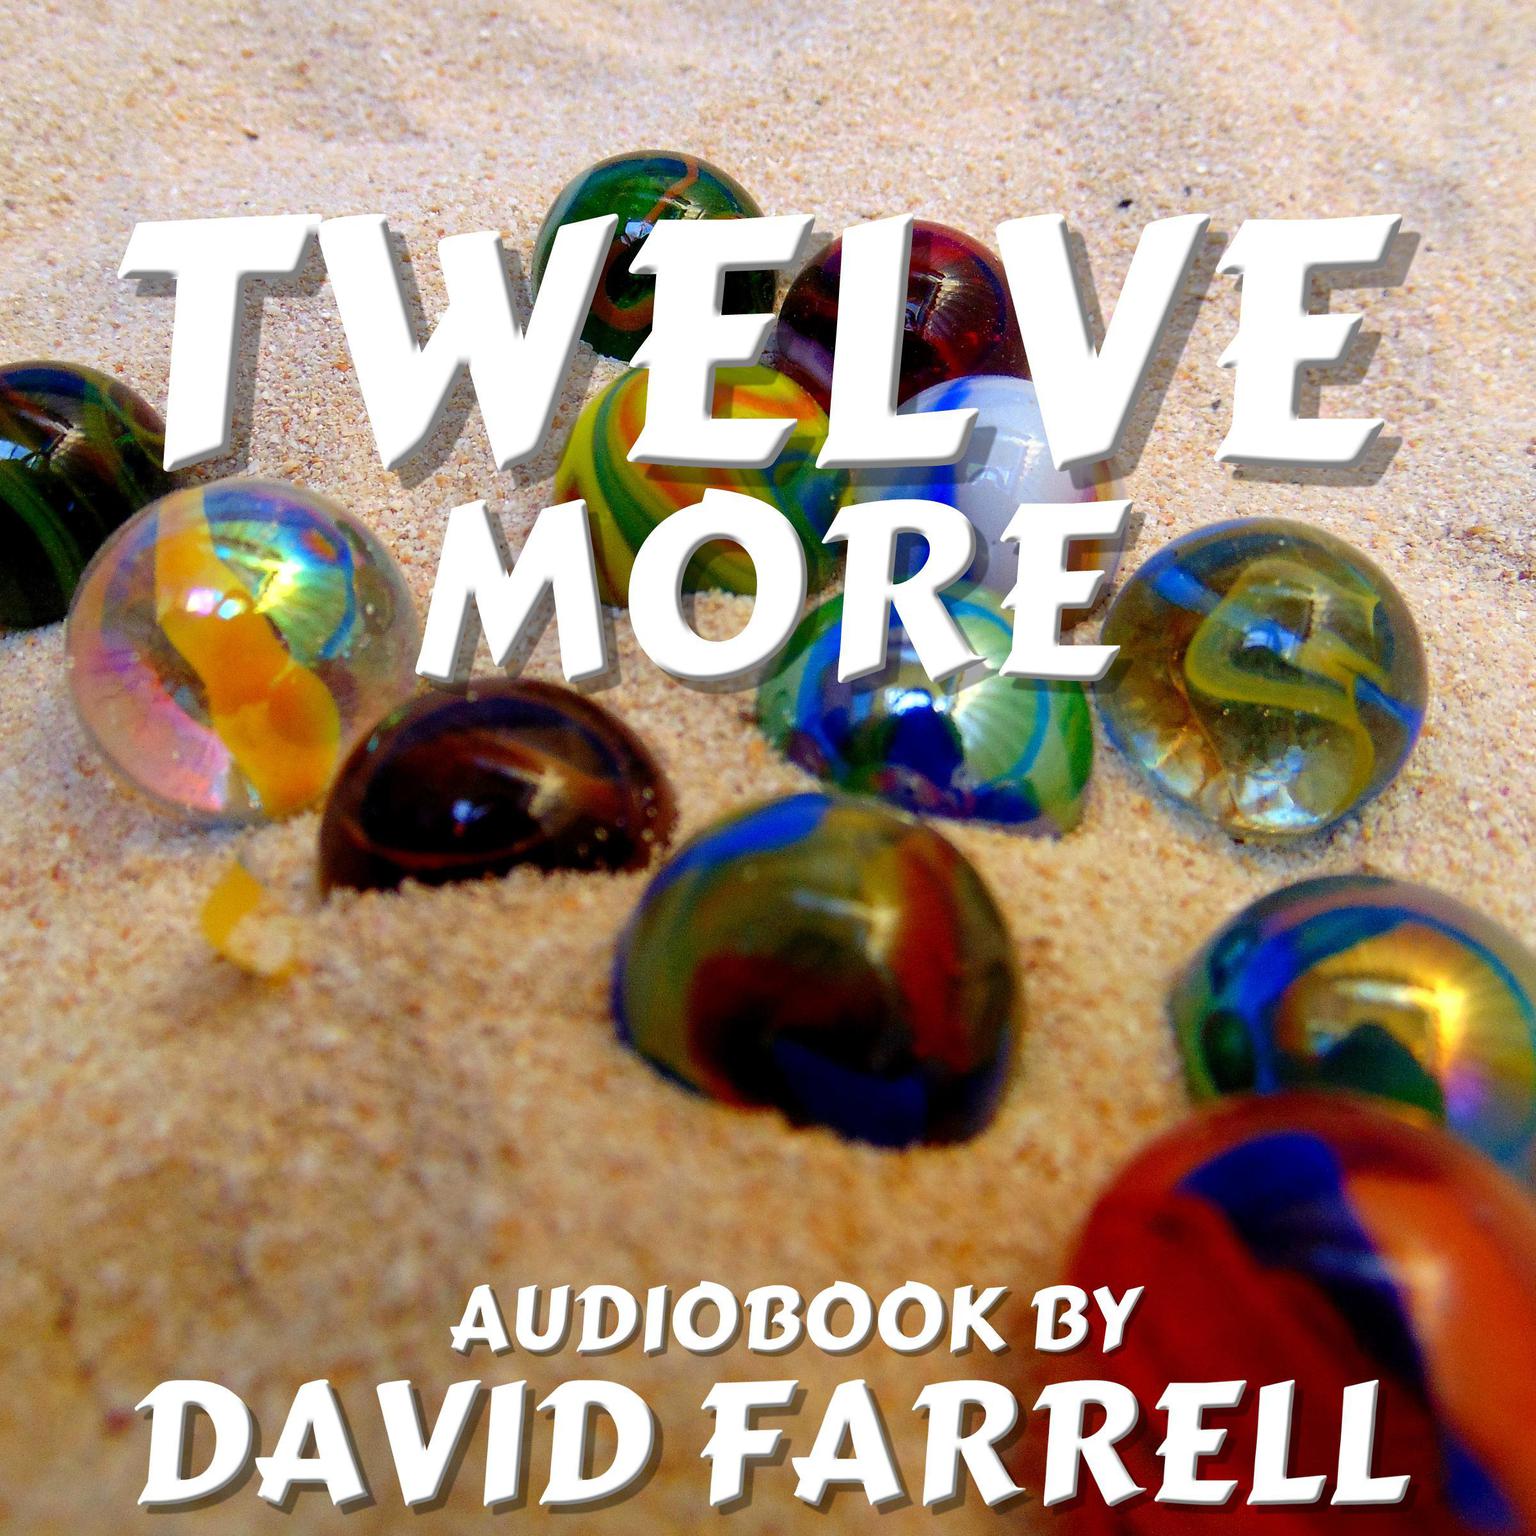 Twelve More Audiobook, by David Farrell